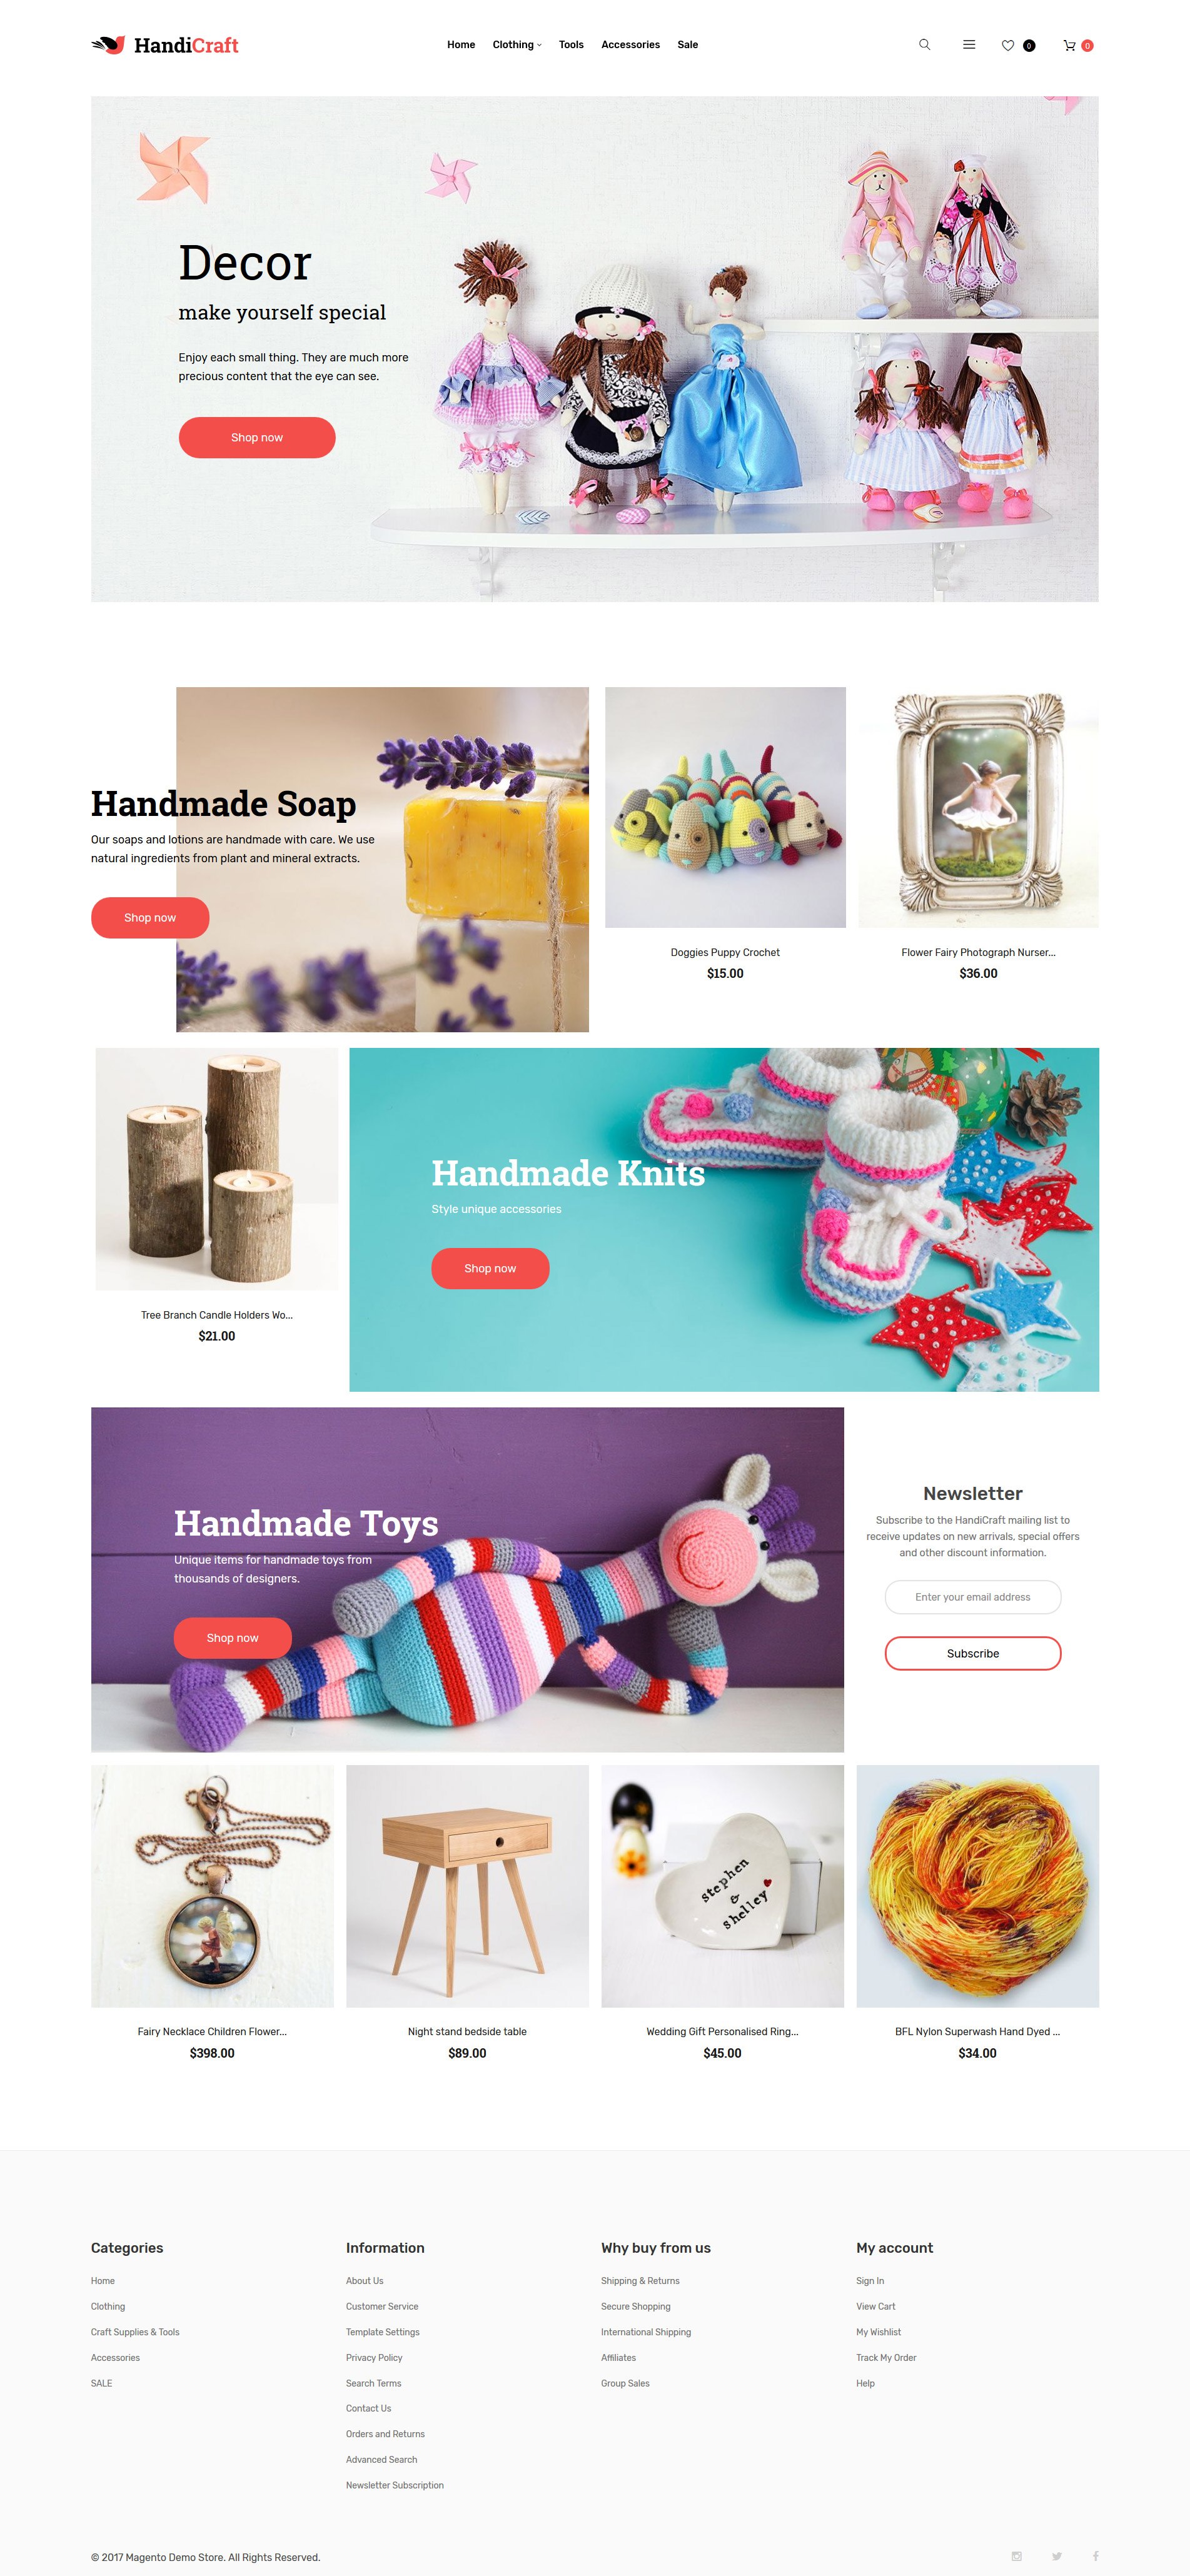 HandiCraft - Handmade Goods Shop Responsive Magento Theme